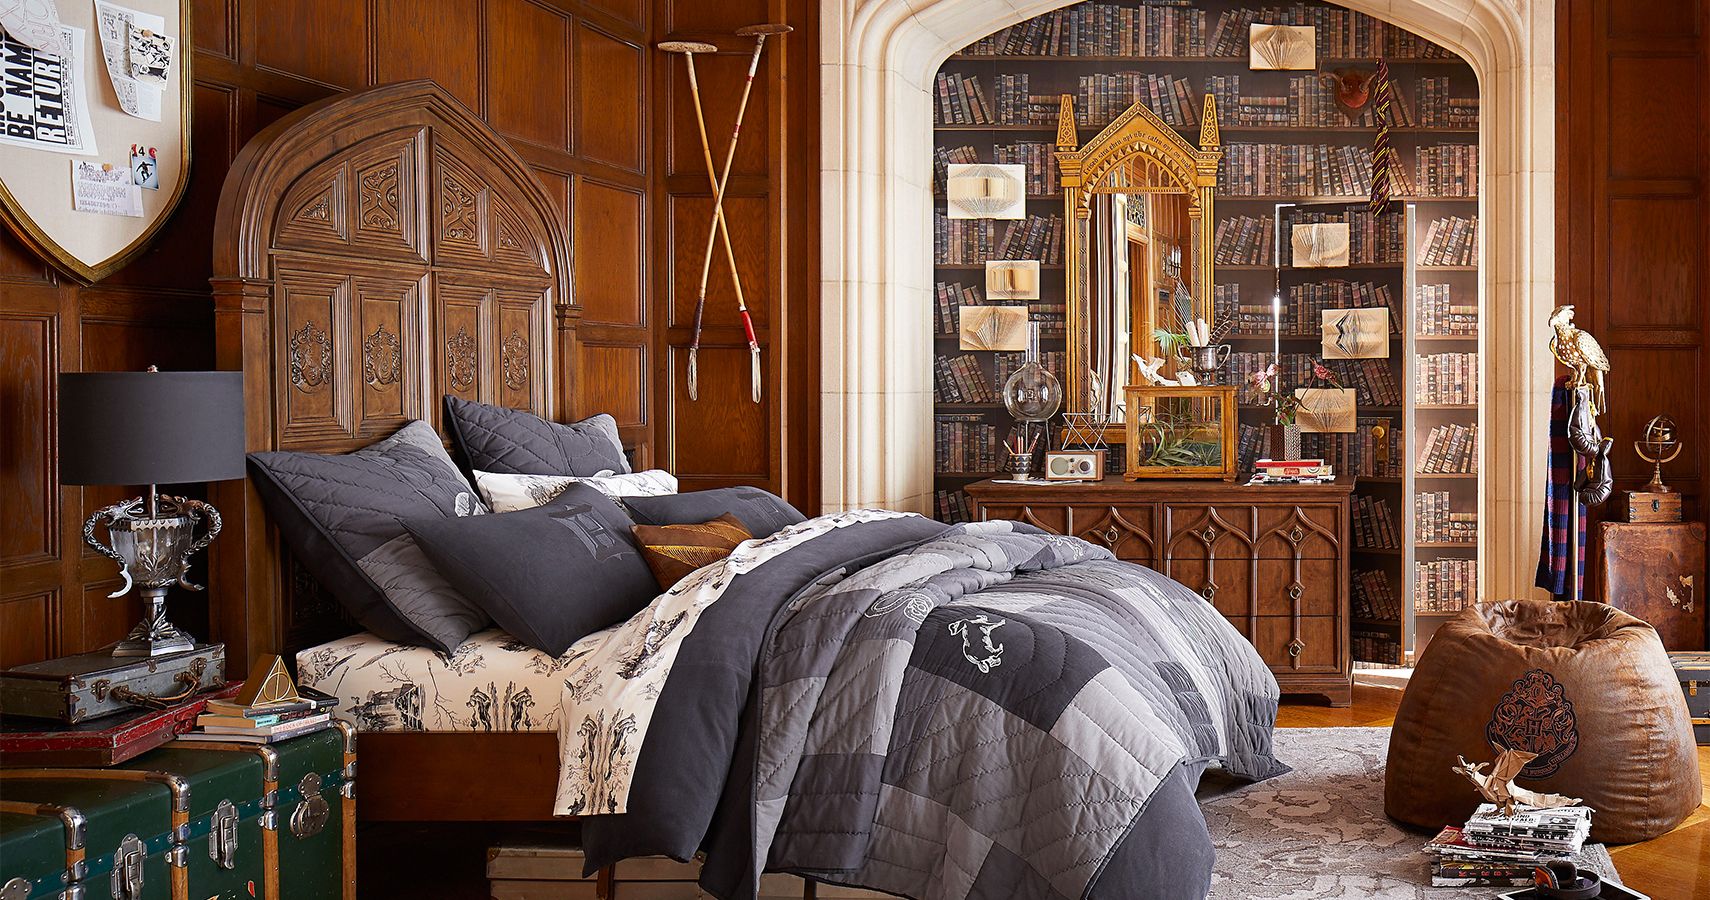 Find Harry Potter Interior Bedroom Decorating